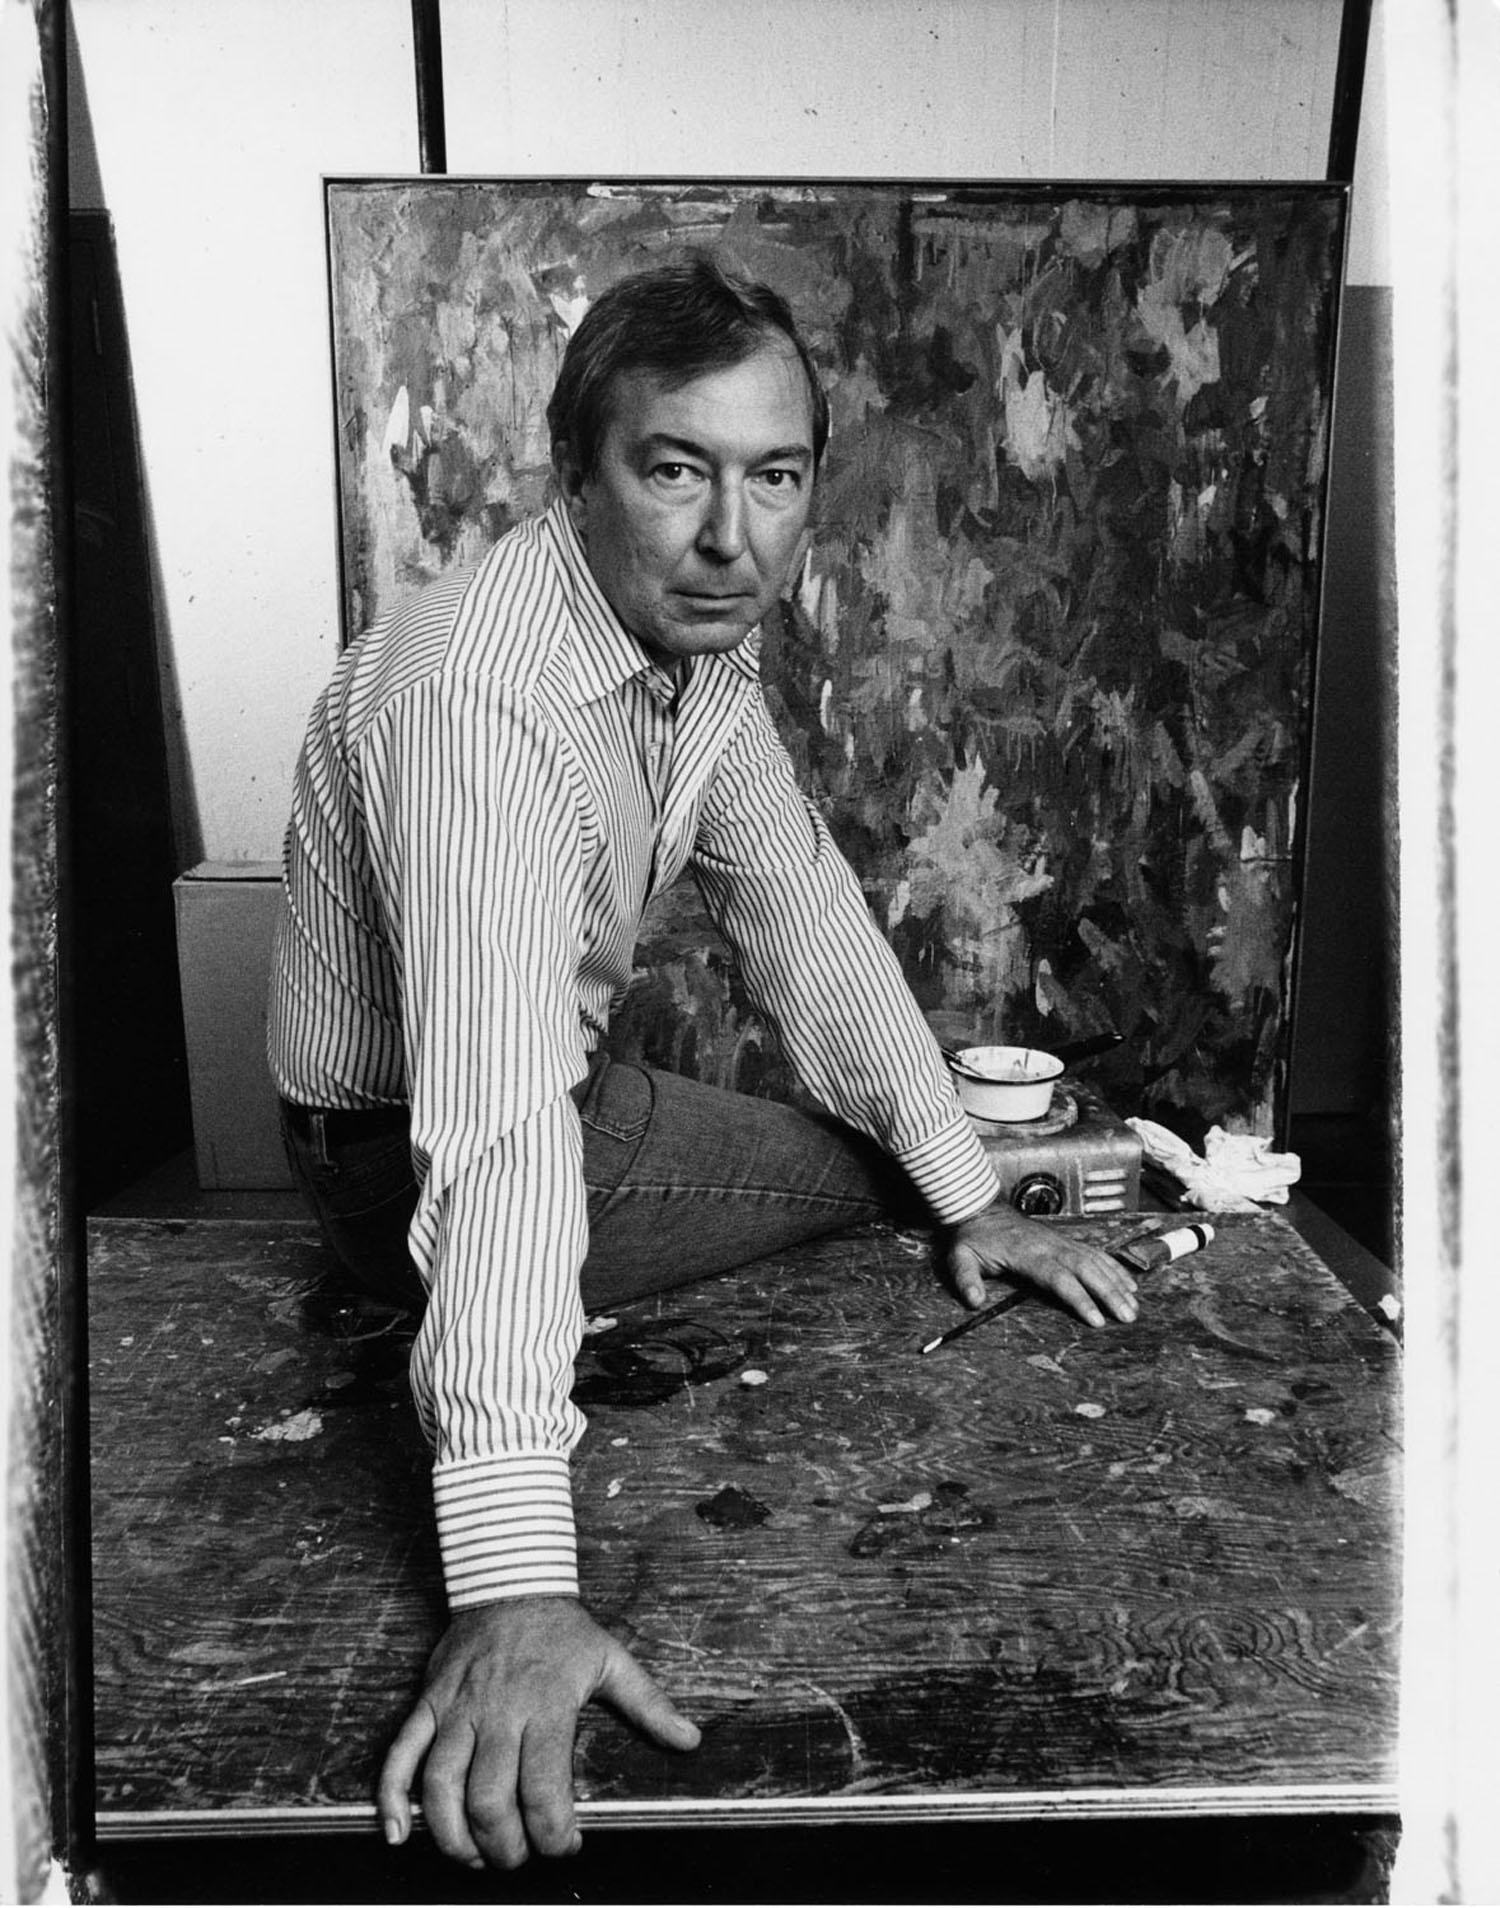 Jack Mitchell Black and White Photograph - Artist Jasper Johns in his NYC studio